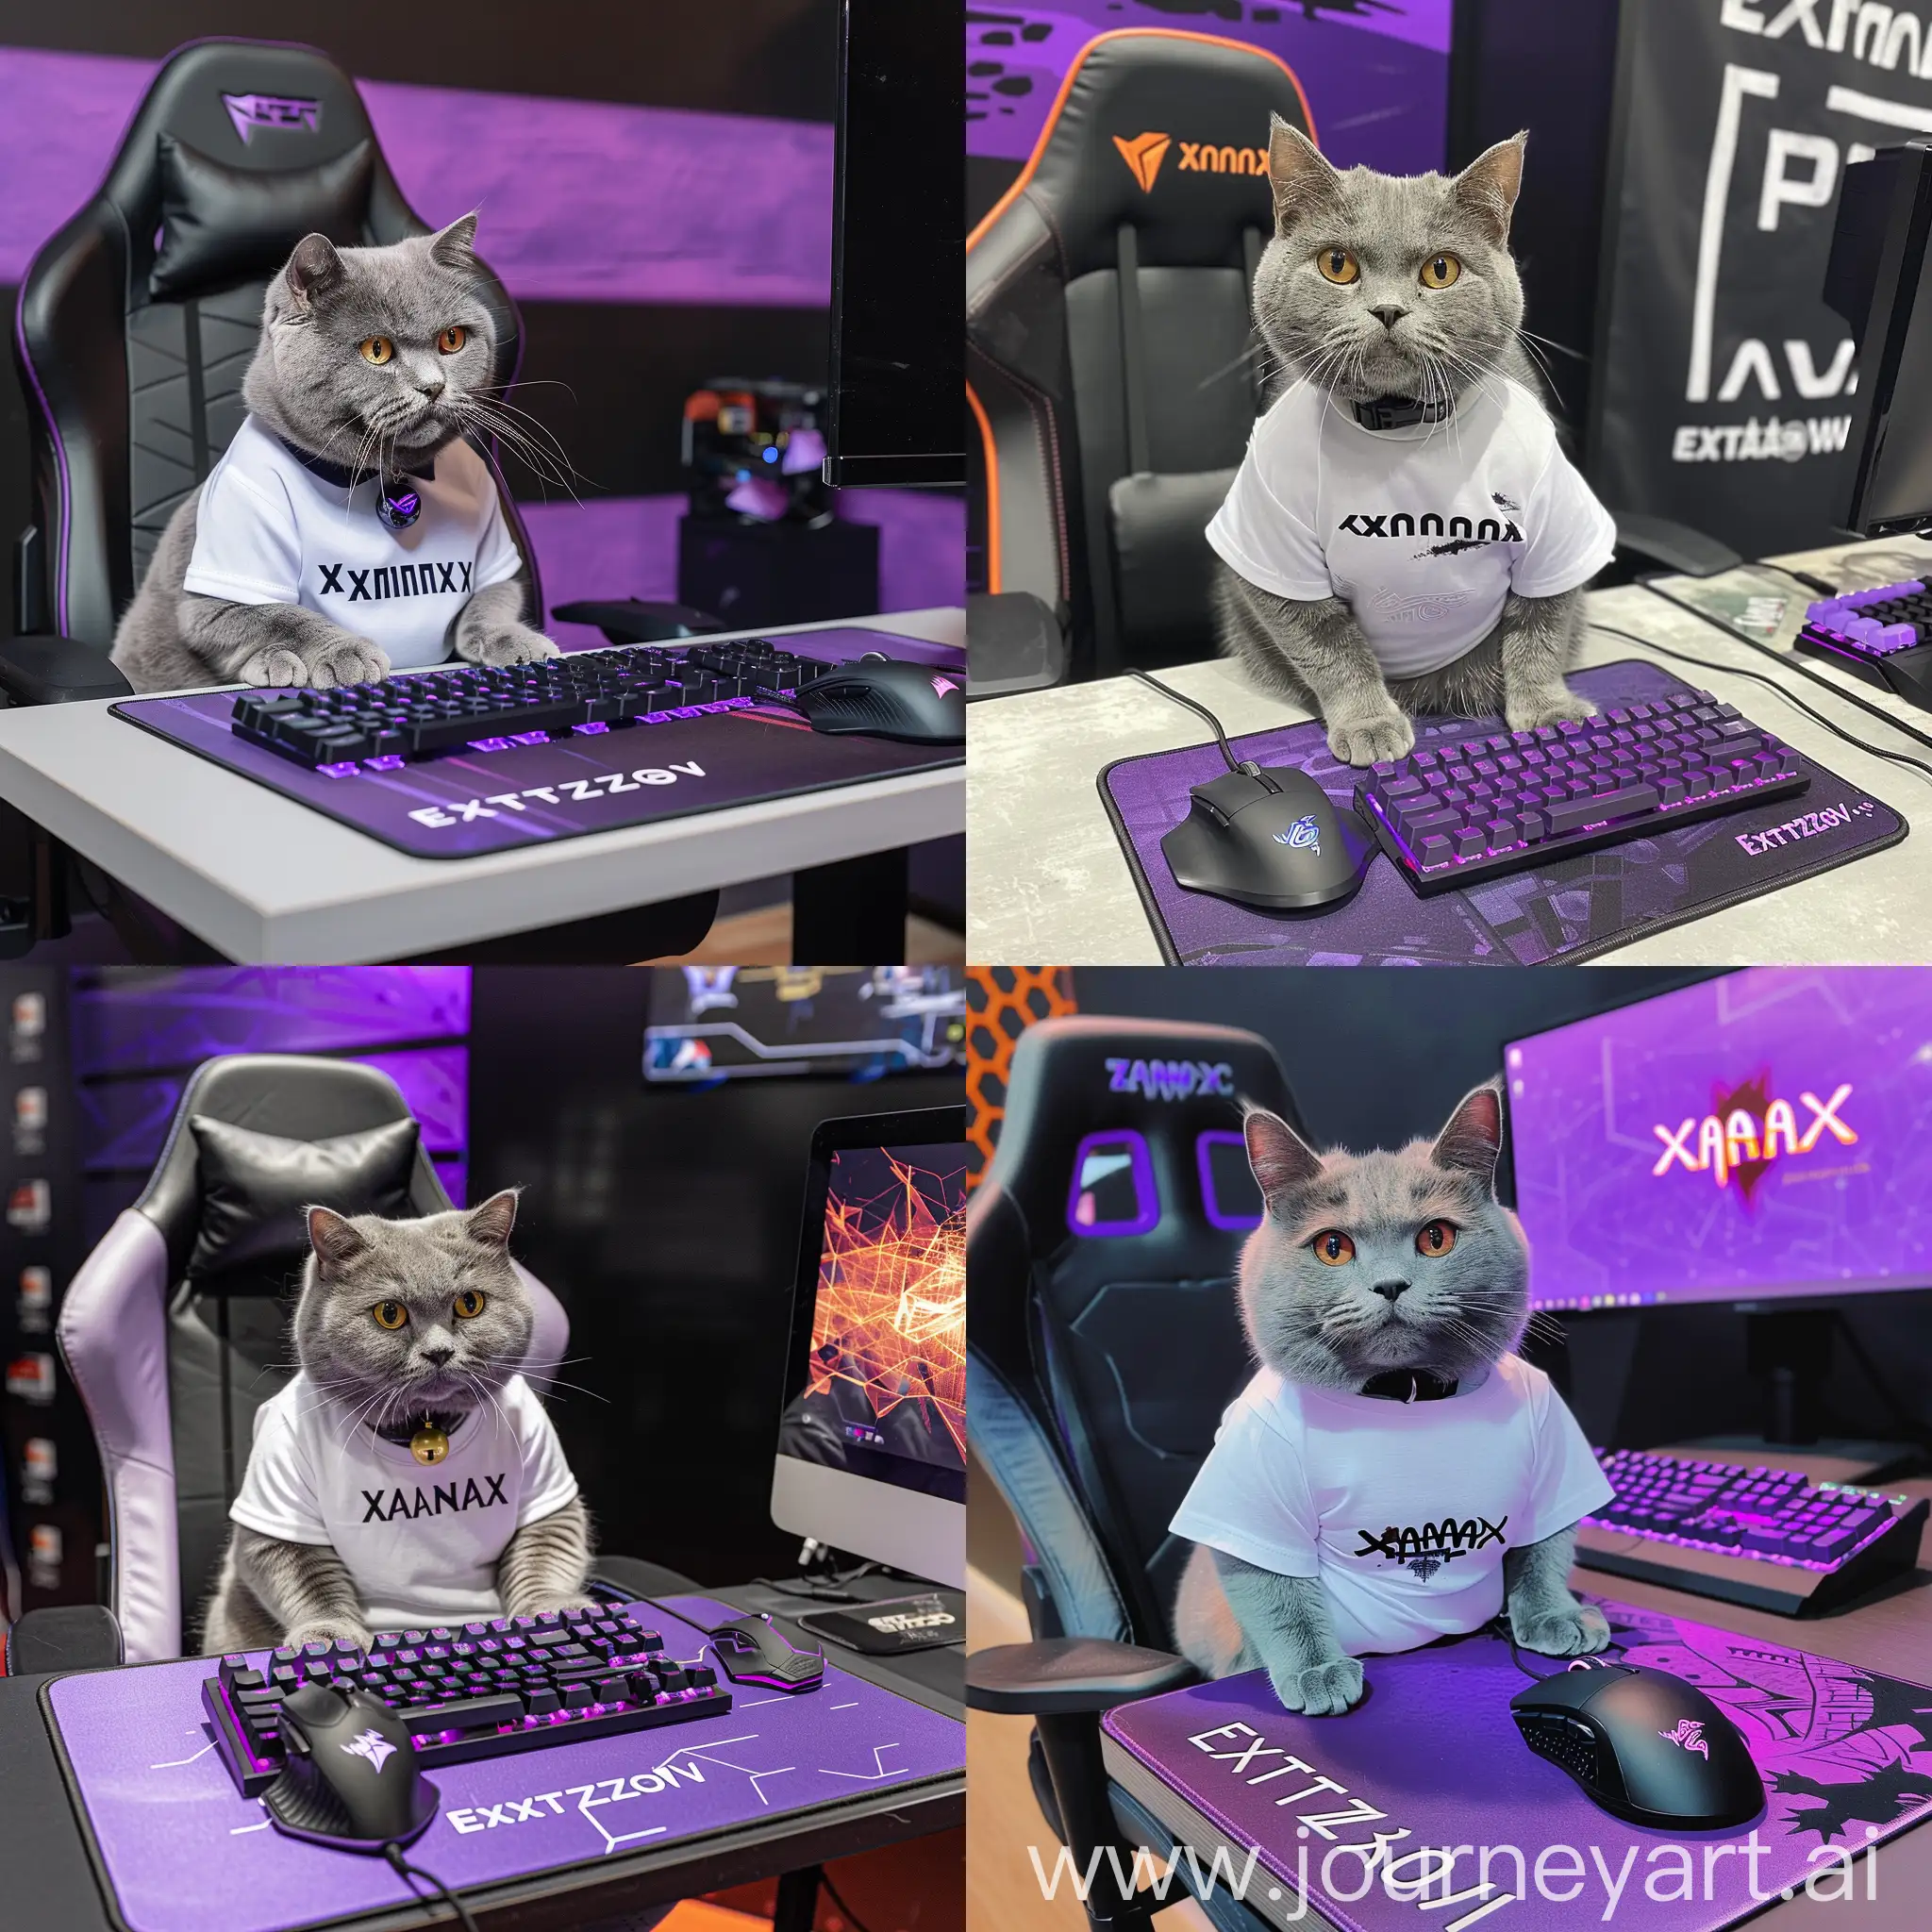 British-Shorthair-Cat-on-Purple-Gaming-Setup-with-XANAX-Shirt